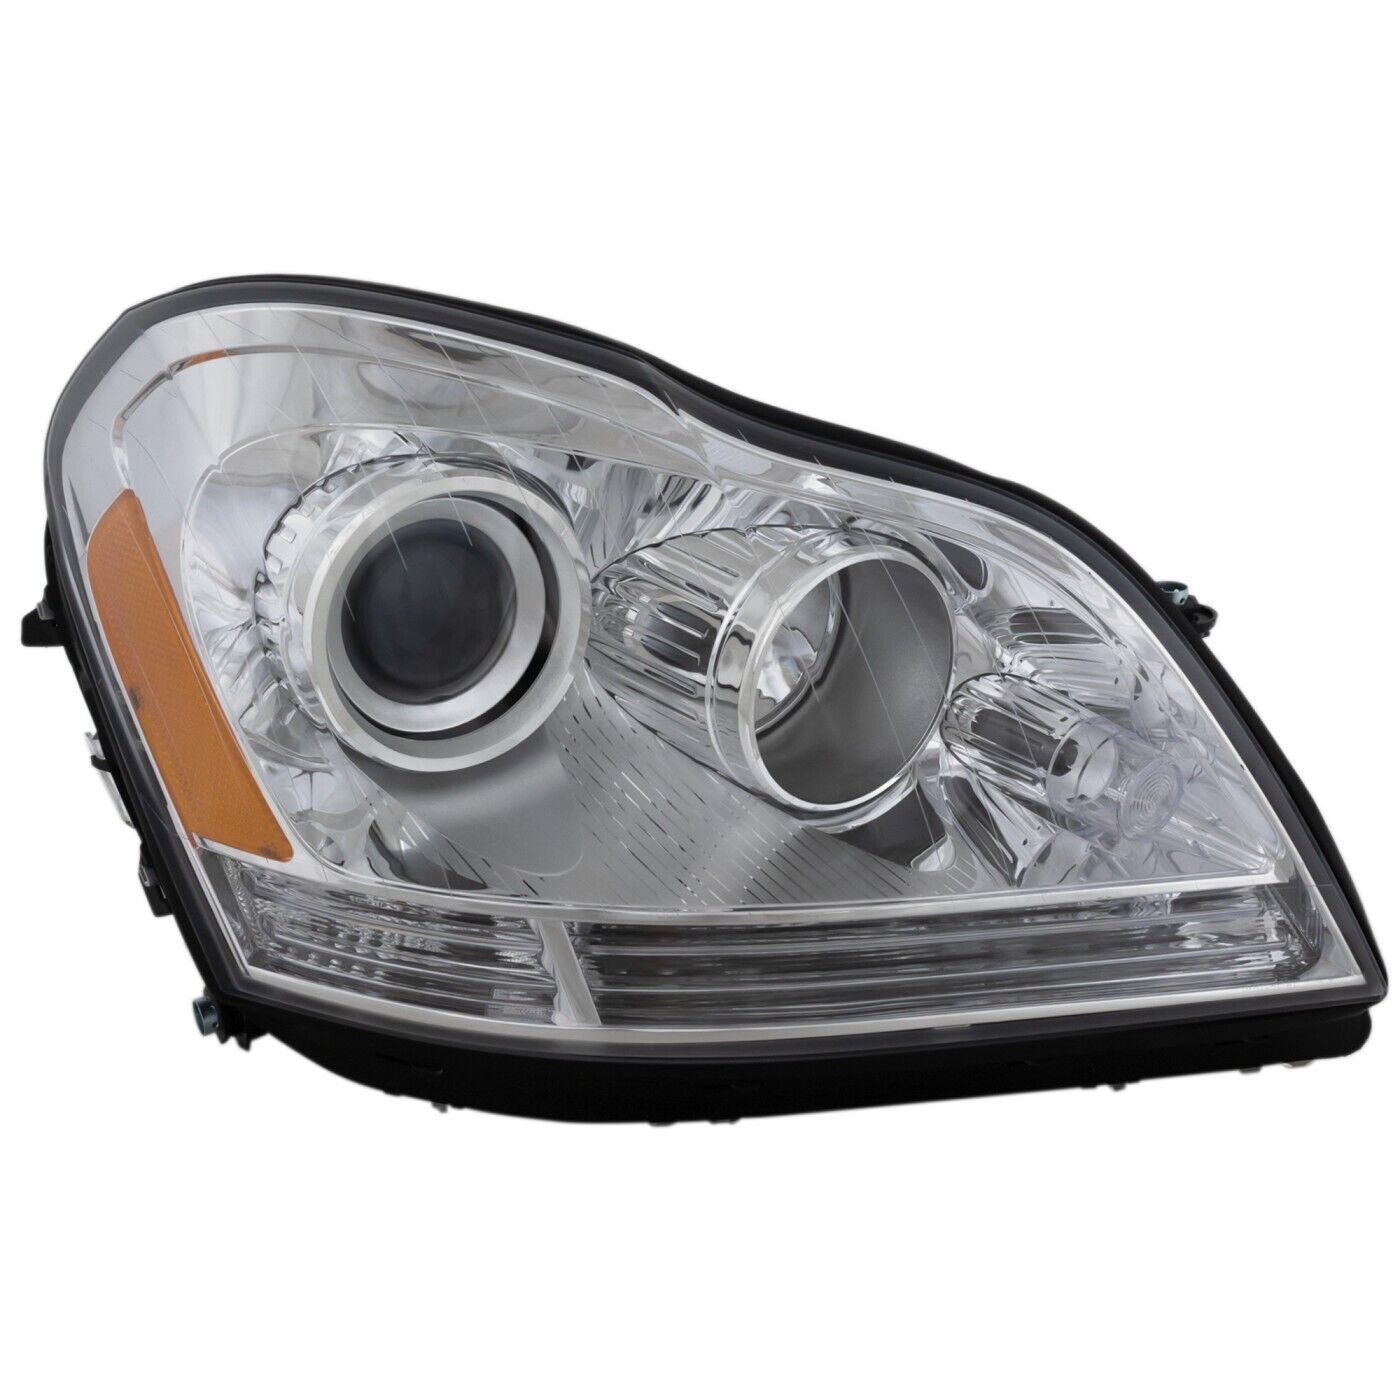 Headlight For 2007-2012 Mercedes Benz GL450 2007-2009 GL320 Passenger w/ bulb